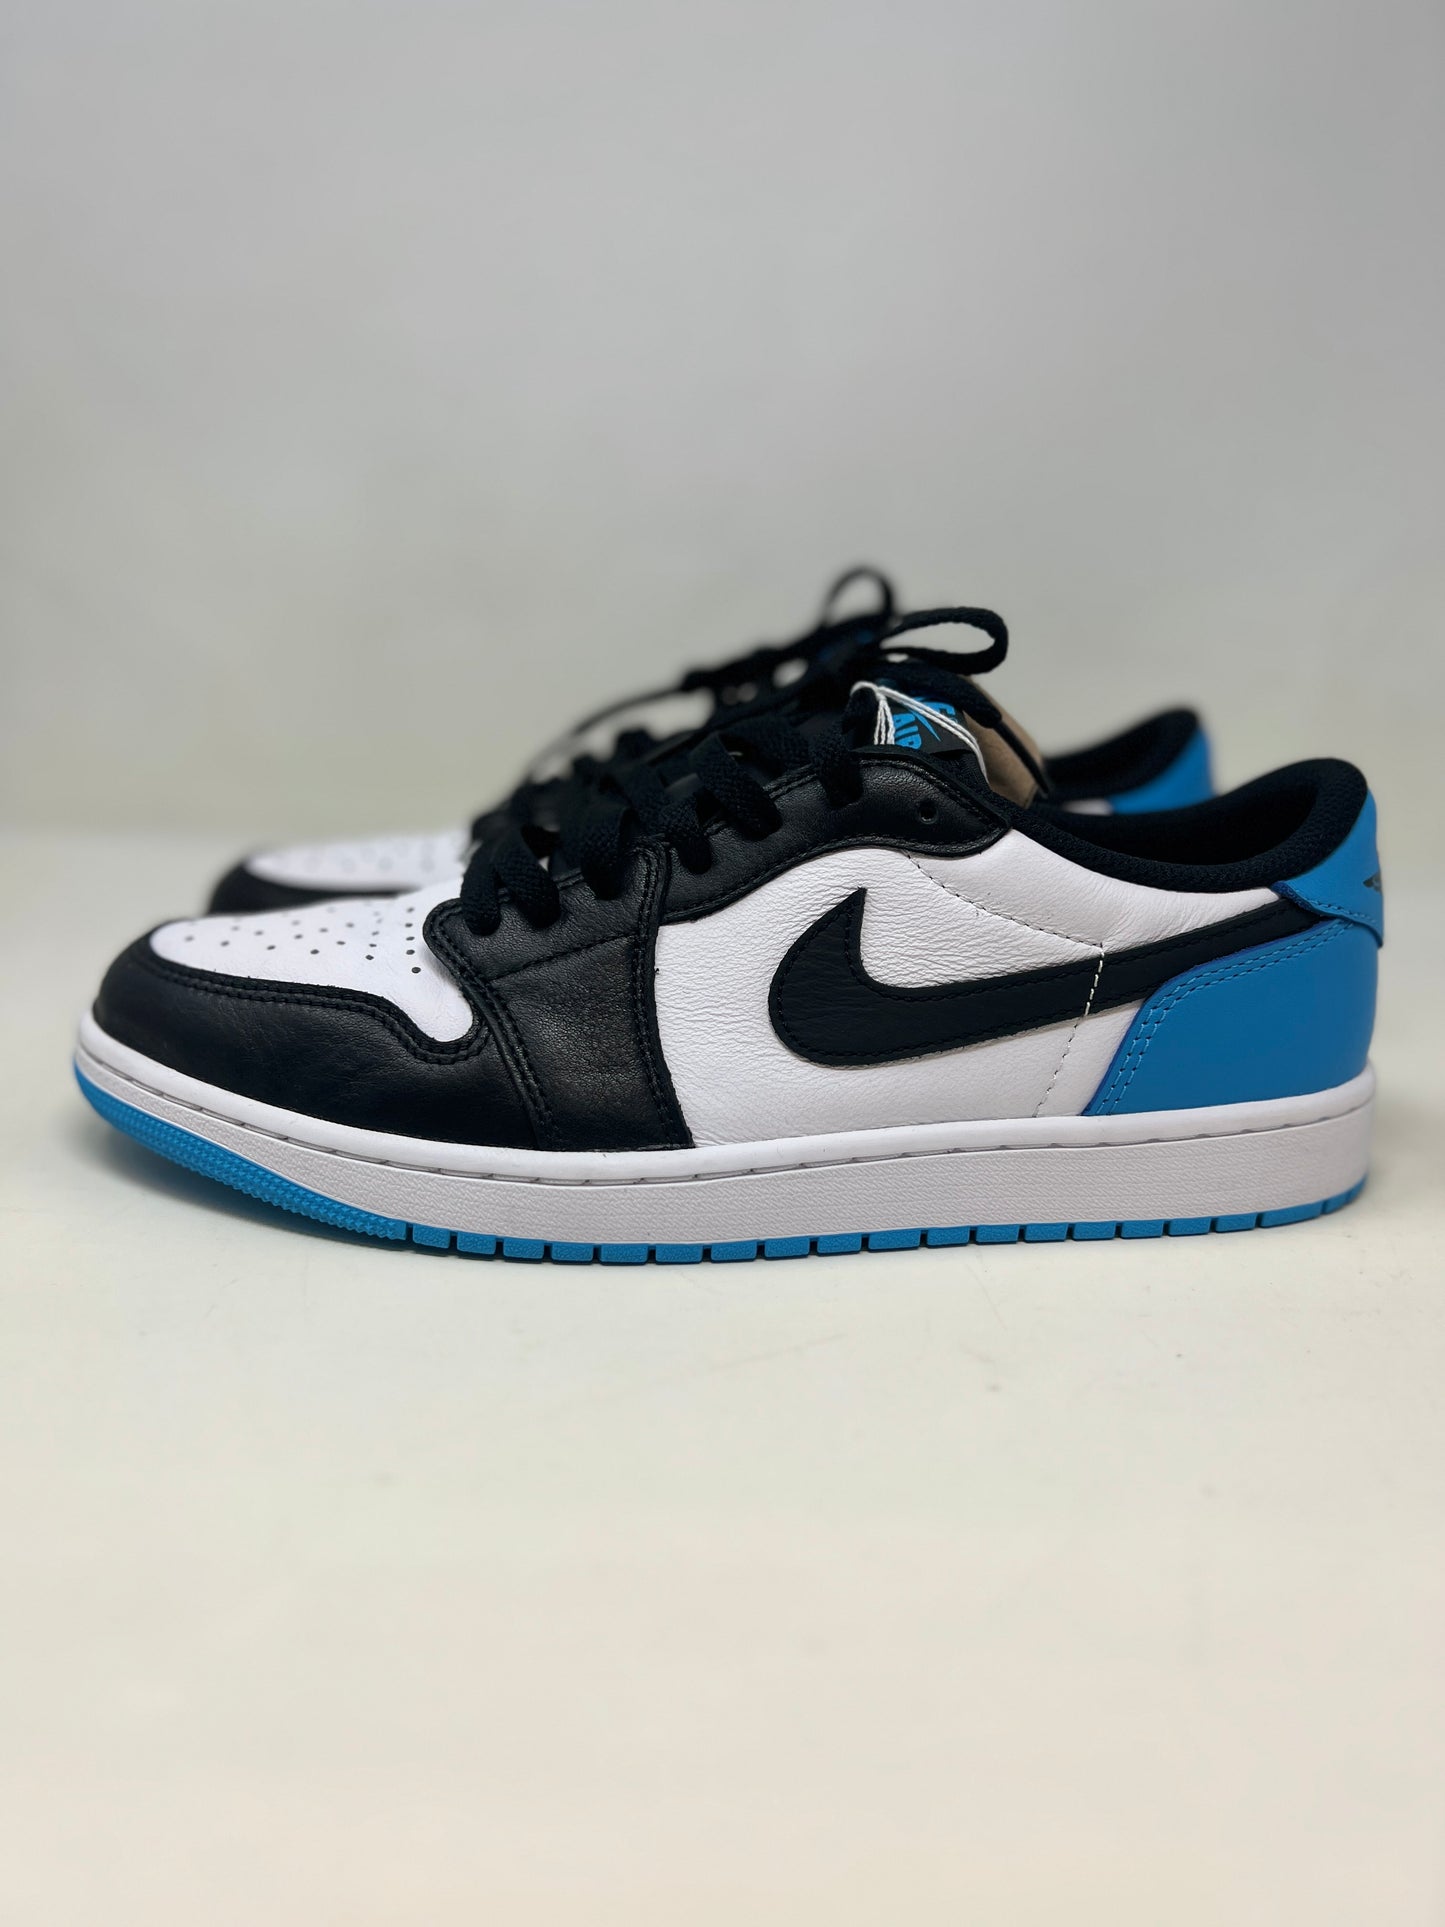 Nike Air Jordan 1 Low OG ‘Powder Blue’ Used